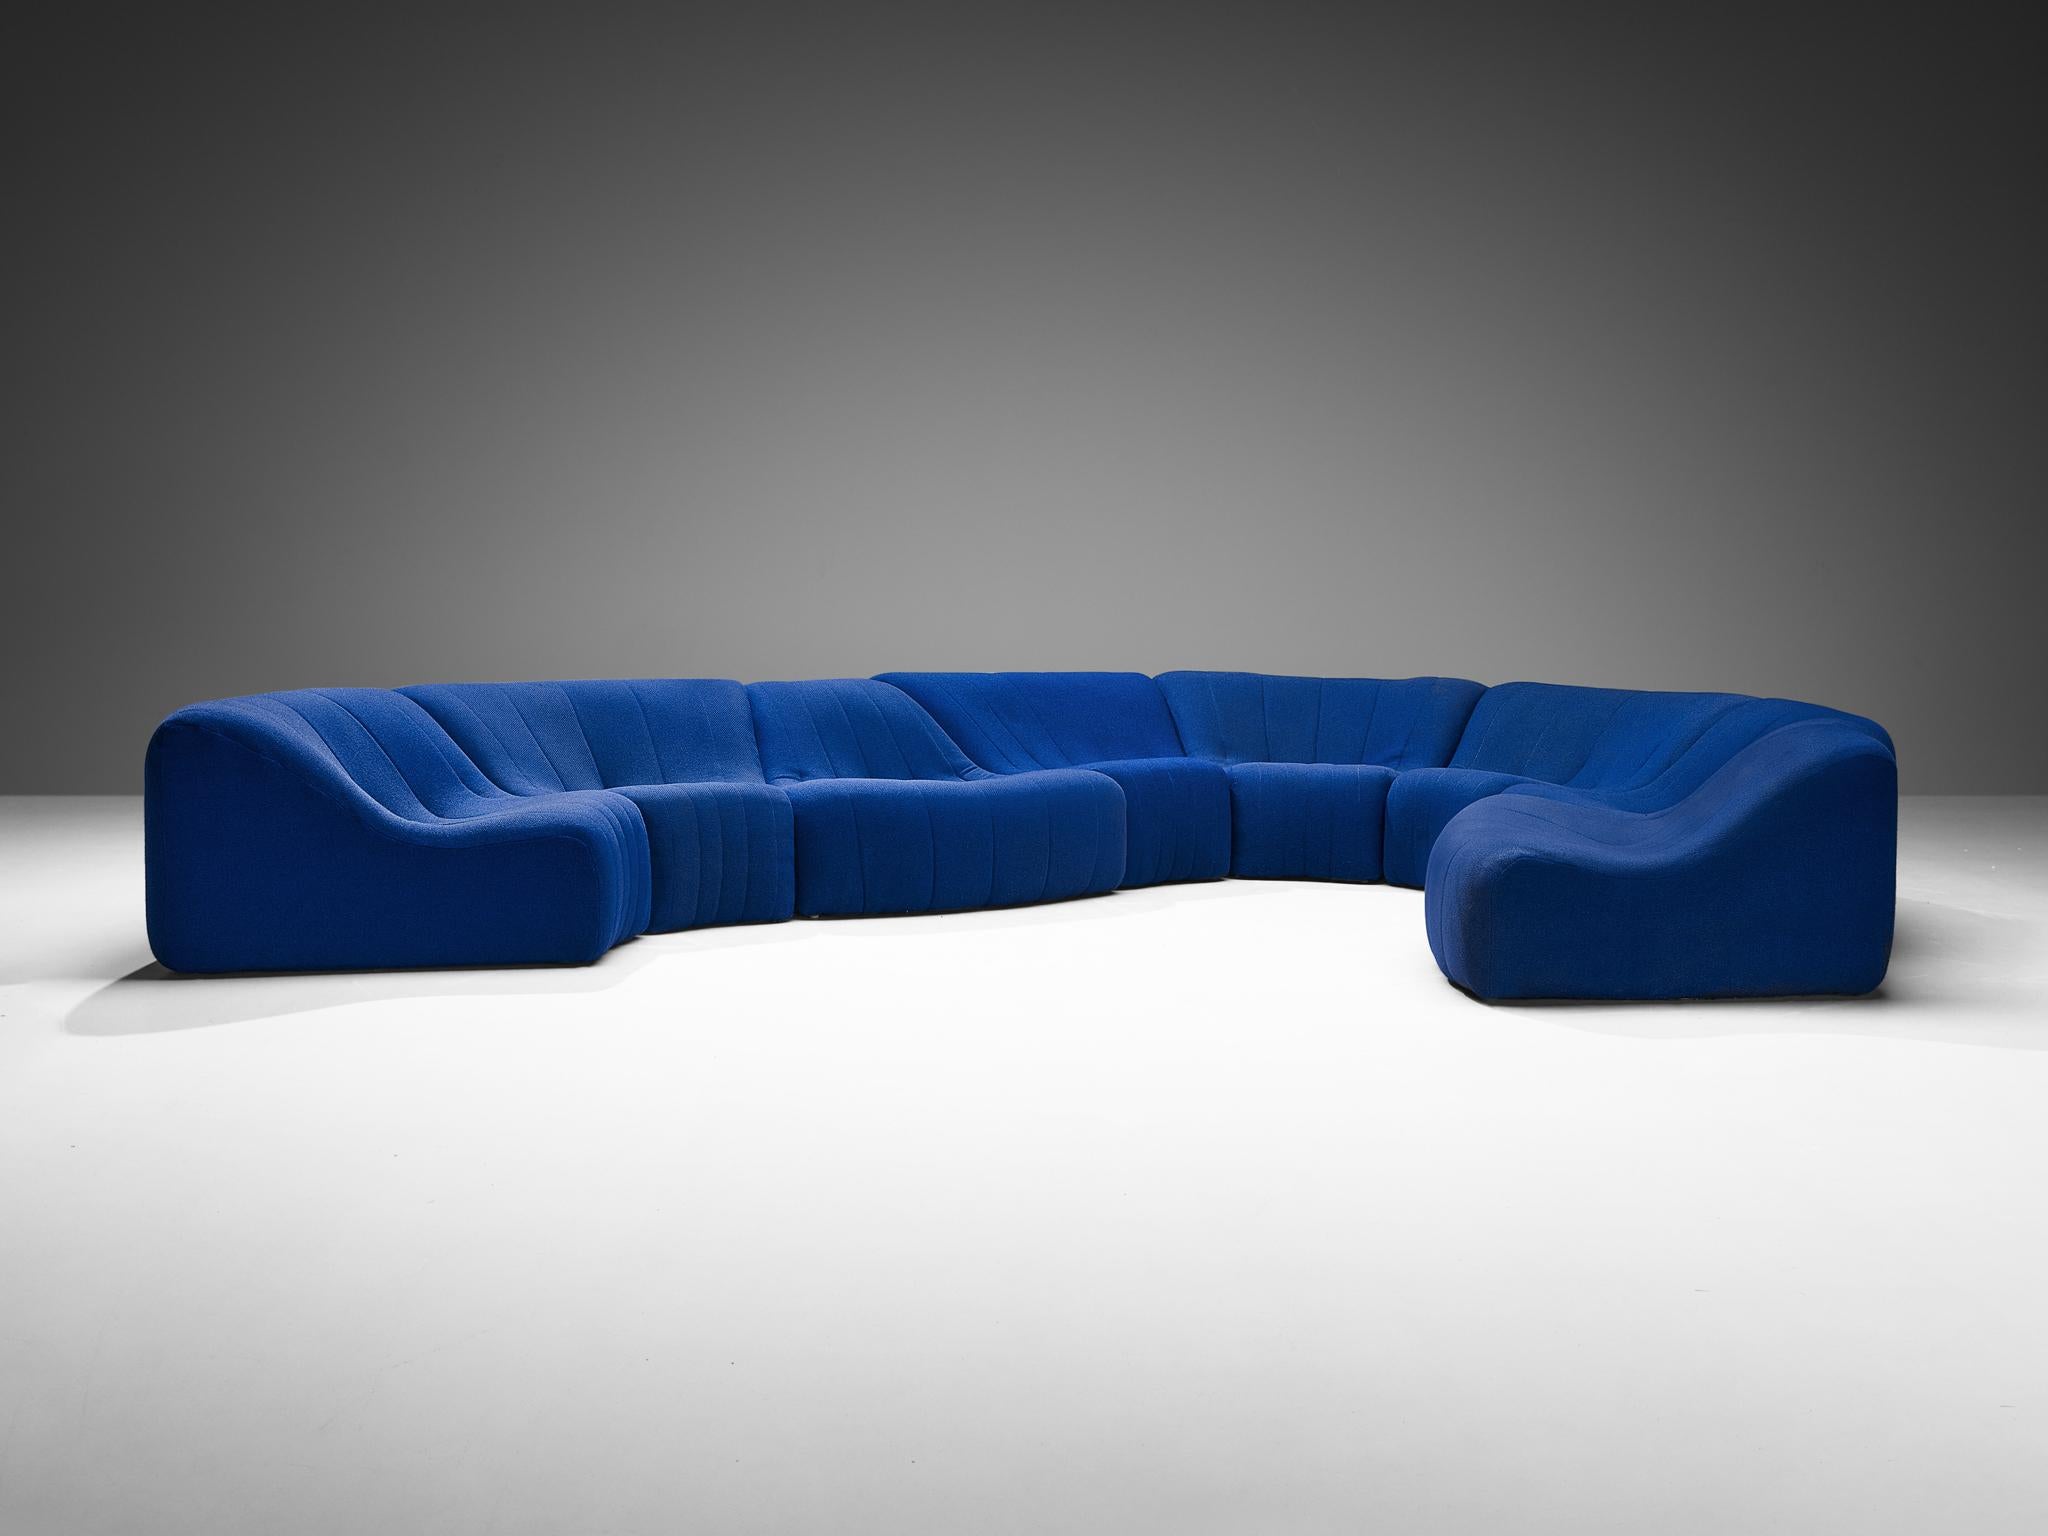 Fabric Kwok Hoi Chan for Steiner 'Chromatic' Bright Blue Modular Sofa 